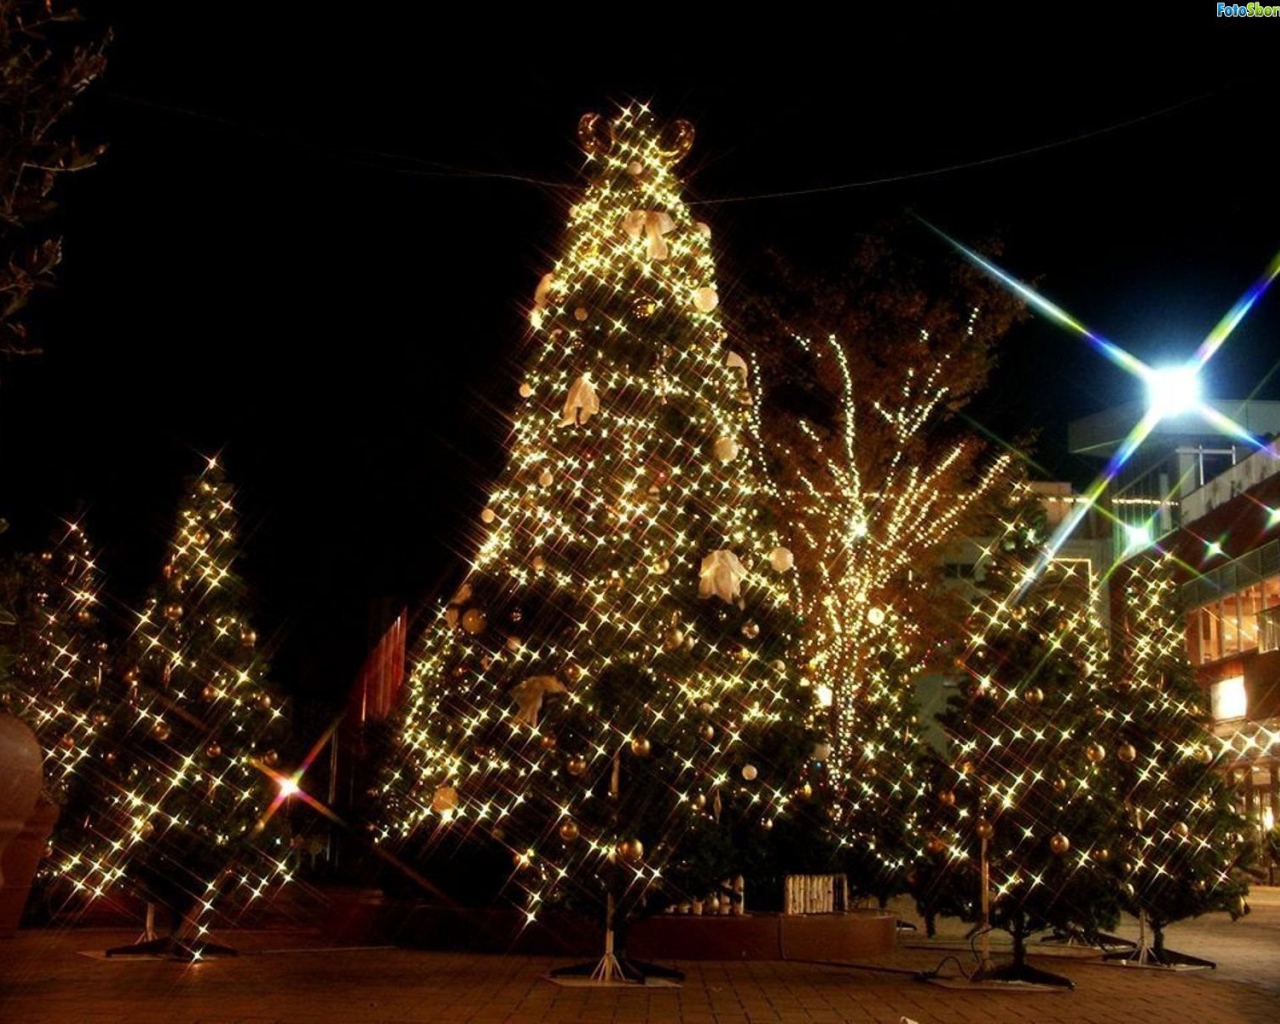 Large Christmas decorations on a Christmas tree